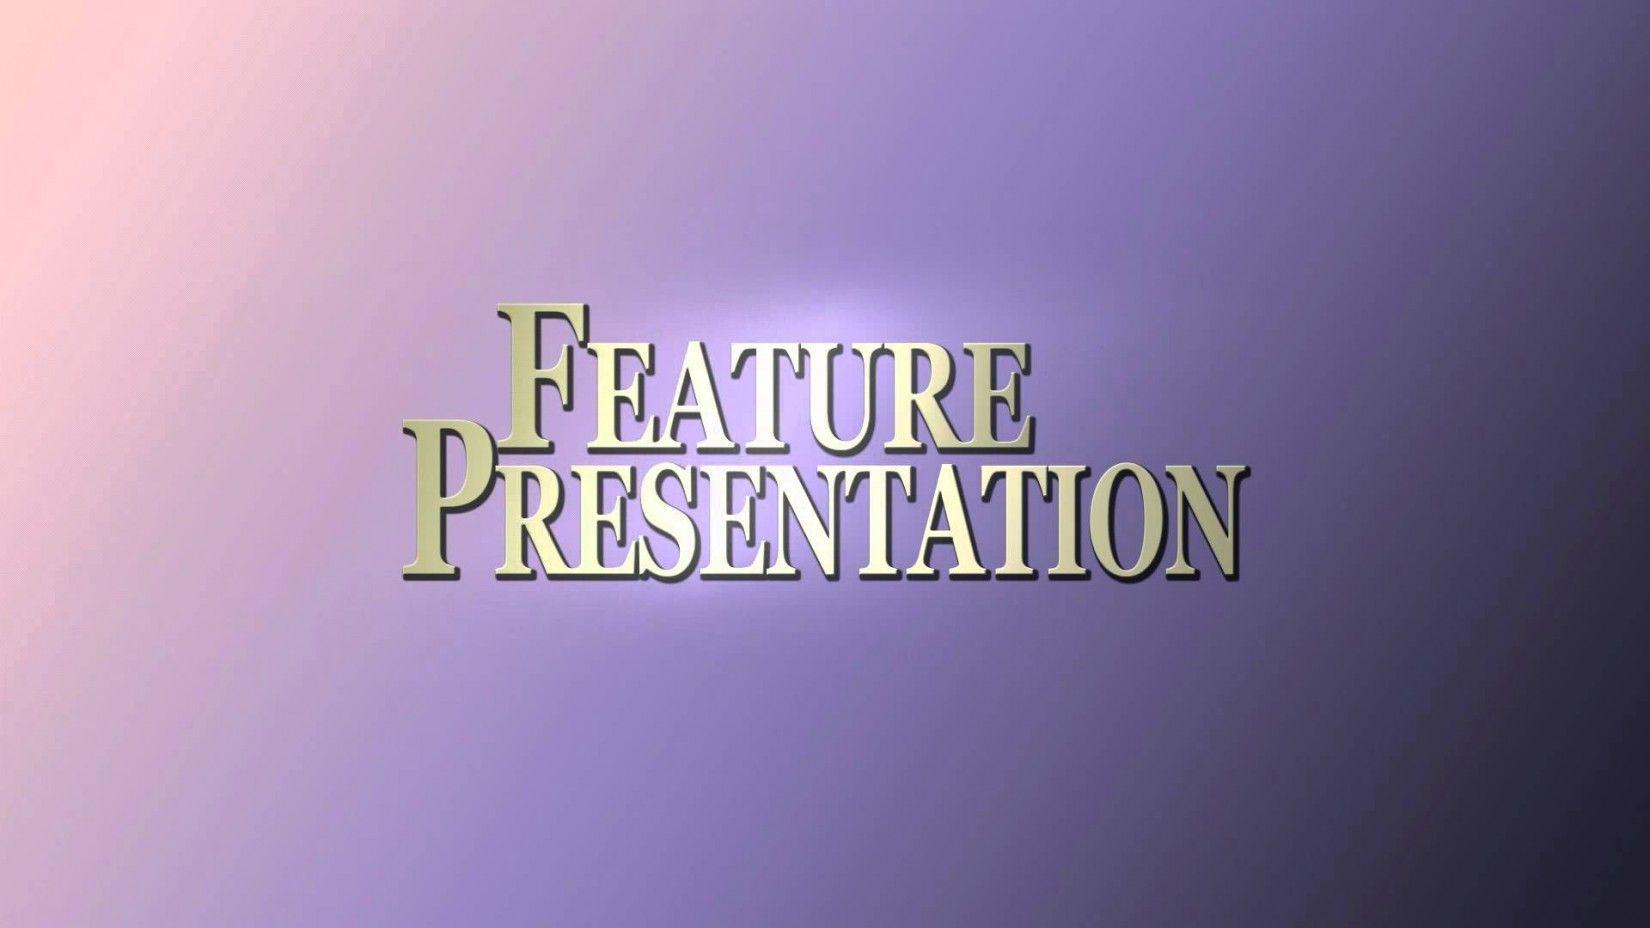 Feature Presentation Logo - Paramount Feature Presentation logo font?